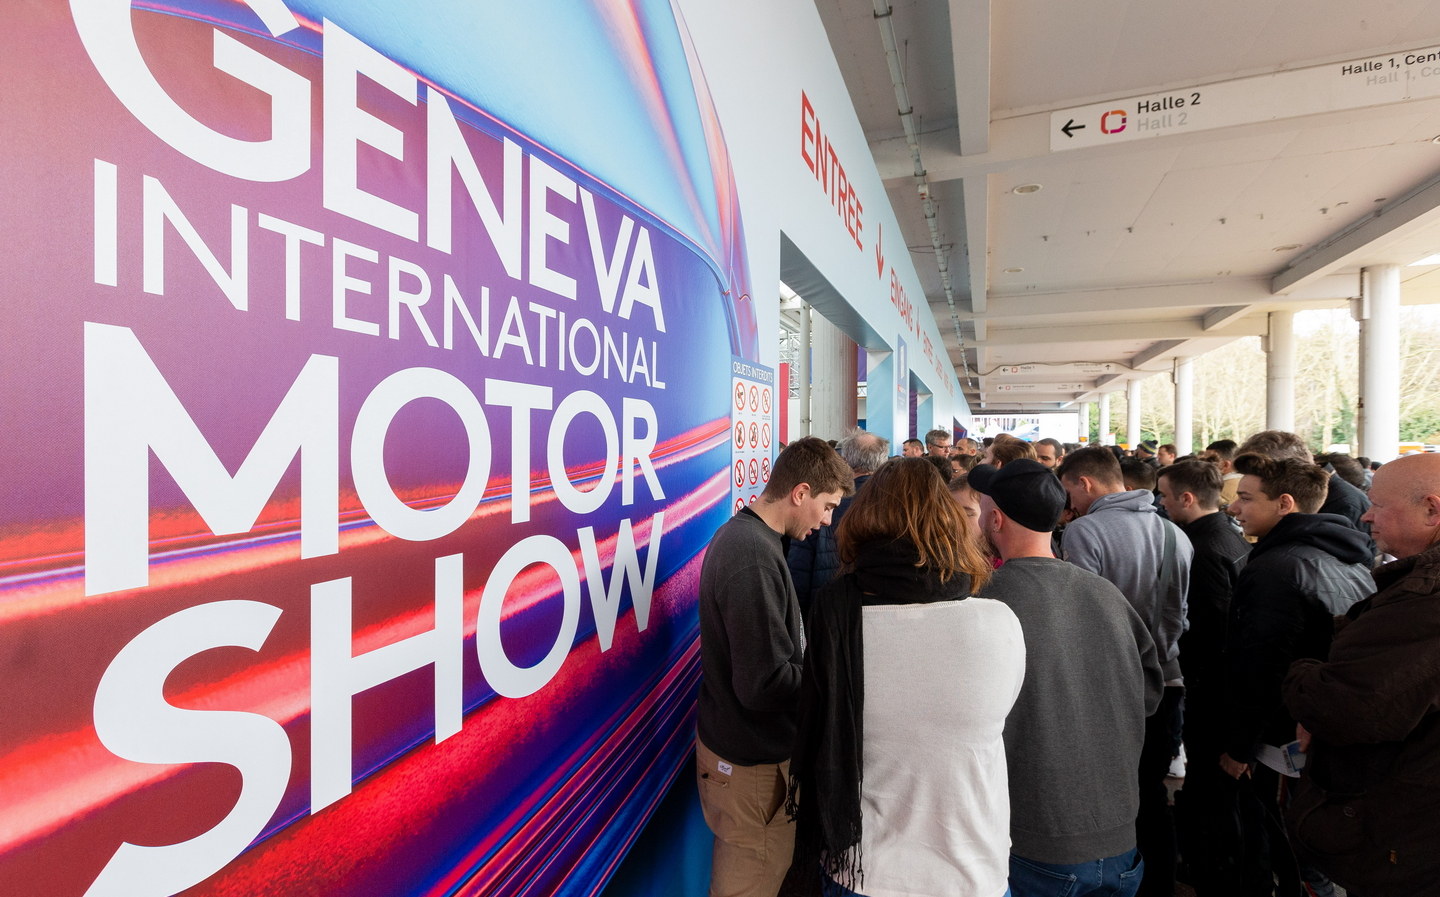 Geneva motor show cancelled for third year running – postponed to 2023